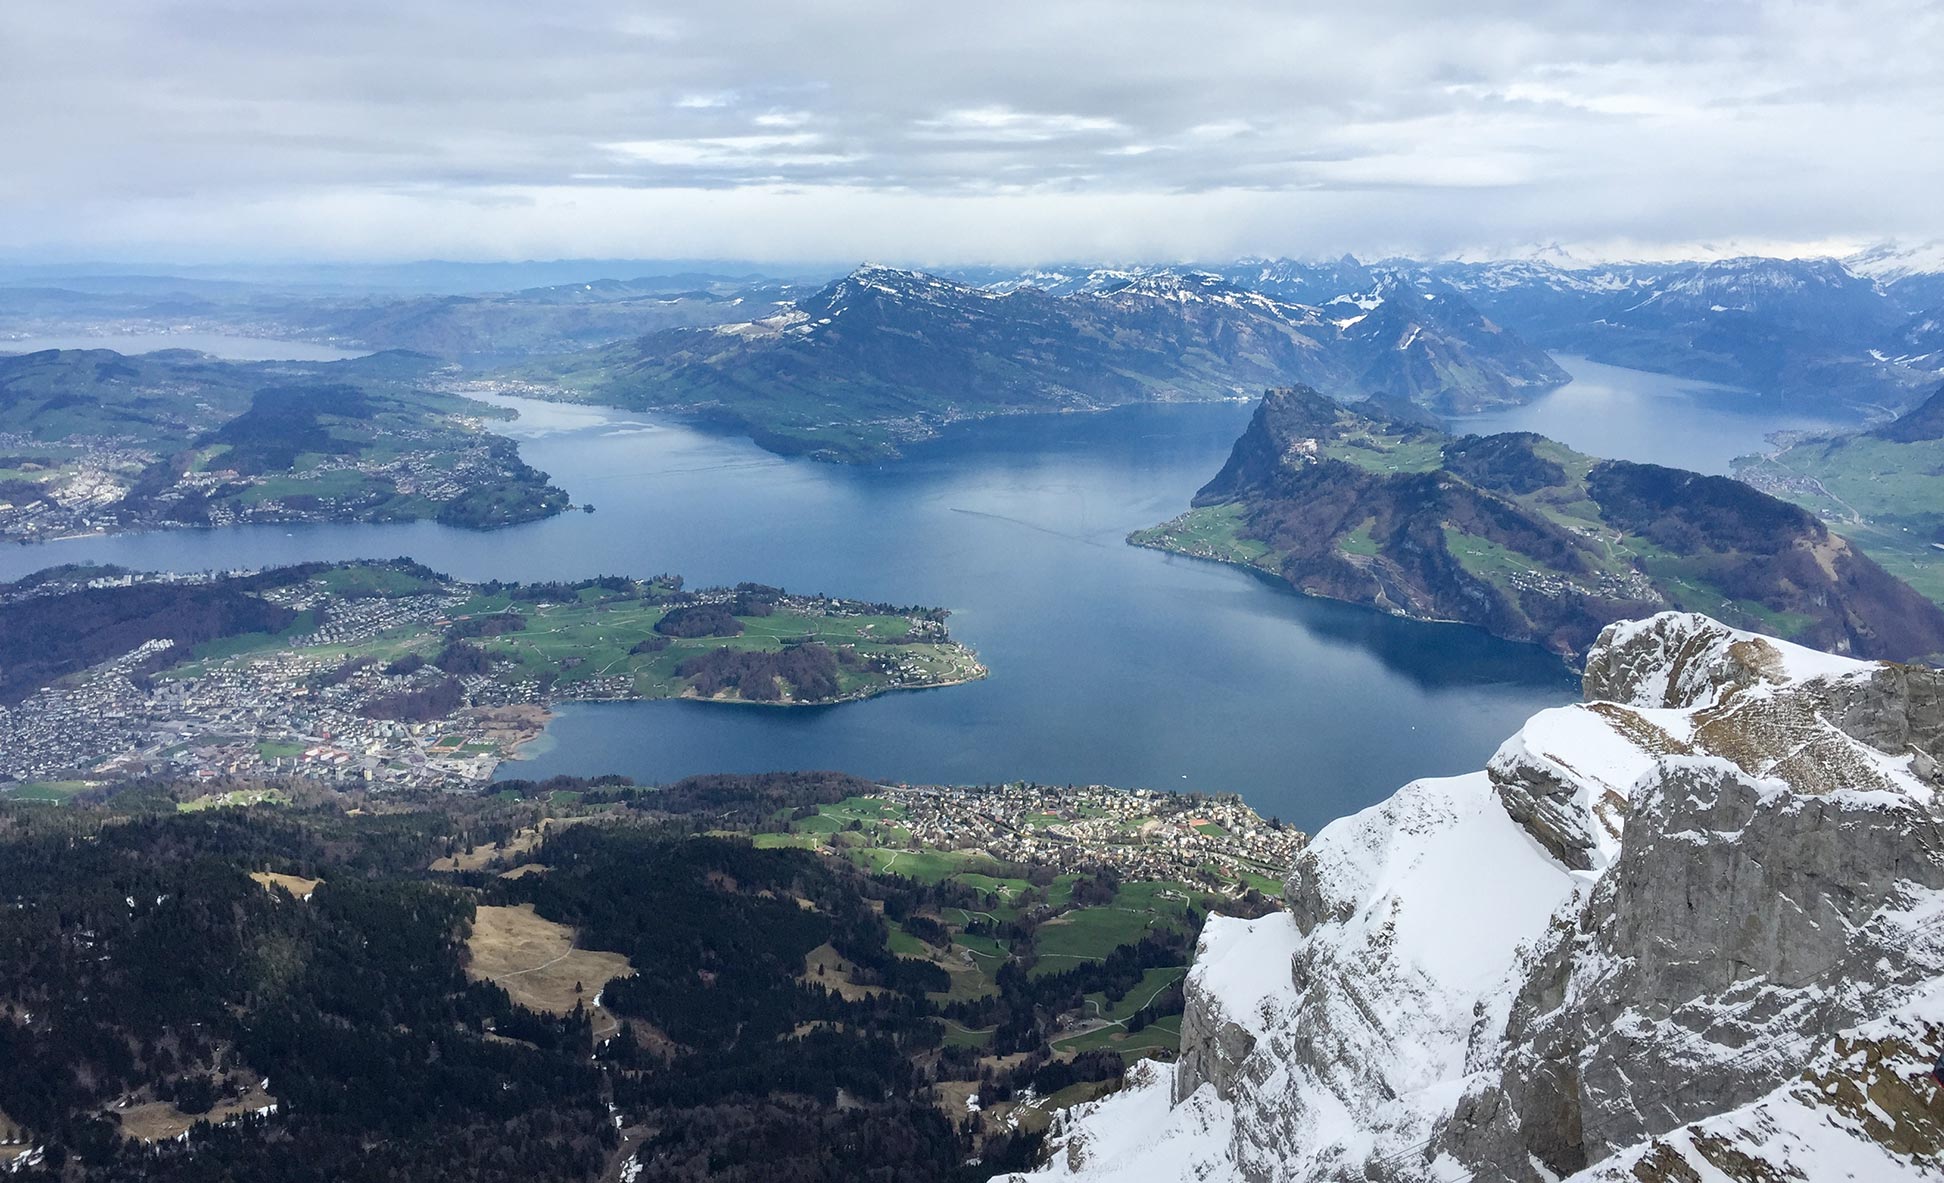 View from Pilatus on Vierwaldstättersee (Lake Lucerne), the birthplace of Switzerland.